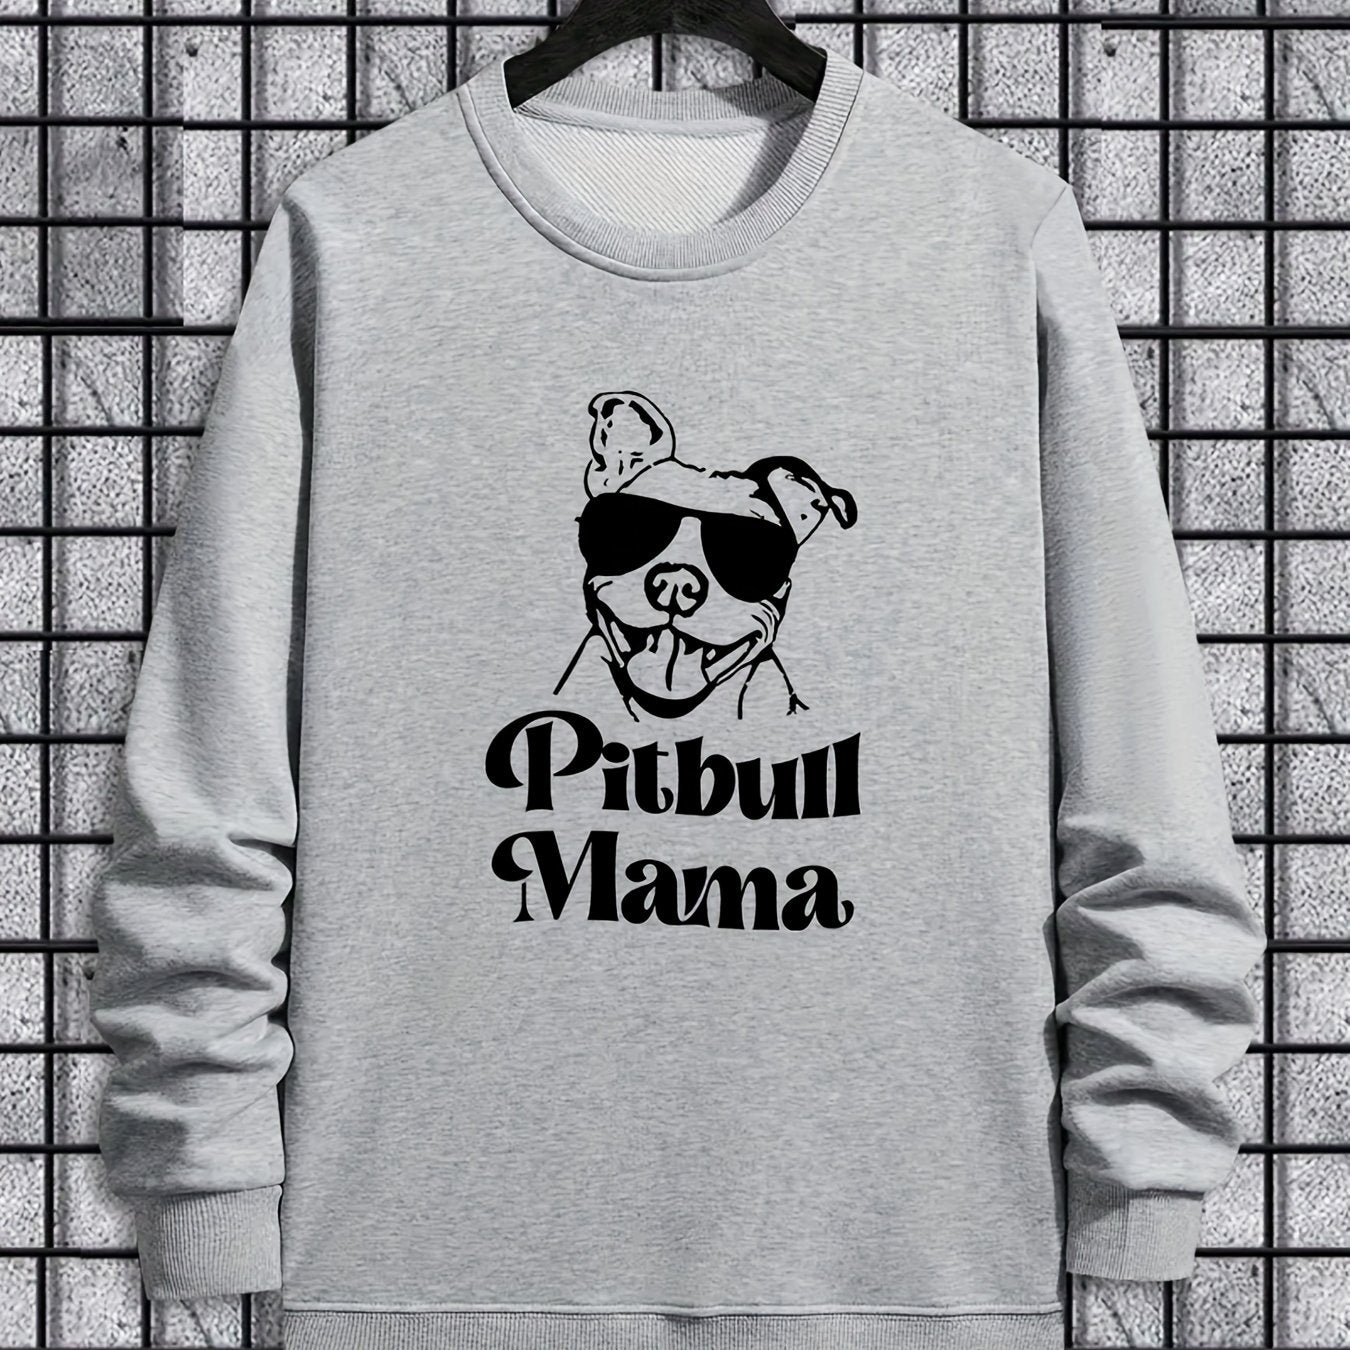 Cute Dog Print Trendy Sweatshirt, Men's Casual Graphic Design Slightly Stretch Crew Neck Pullover Sweatshirt For Autumn Winter